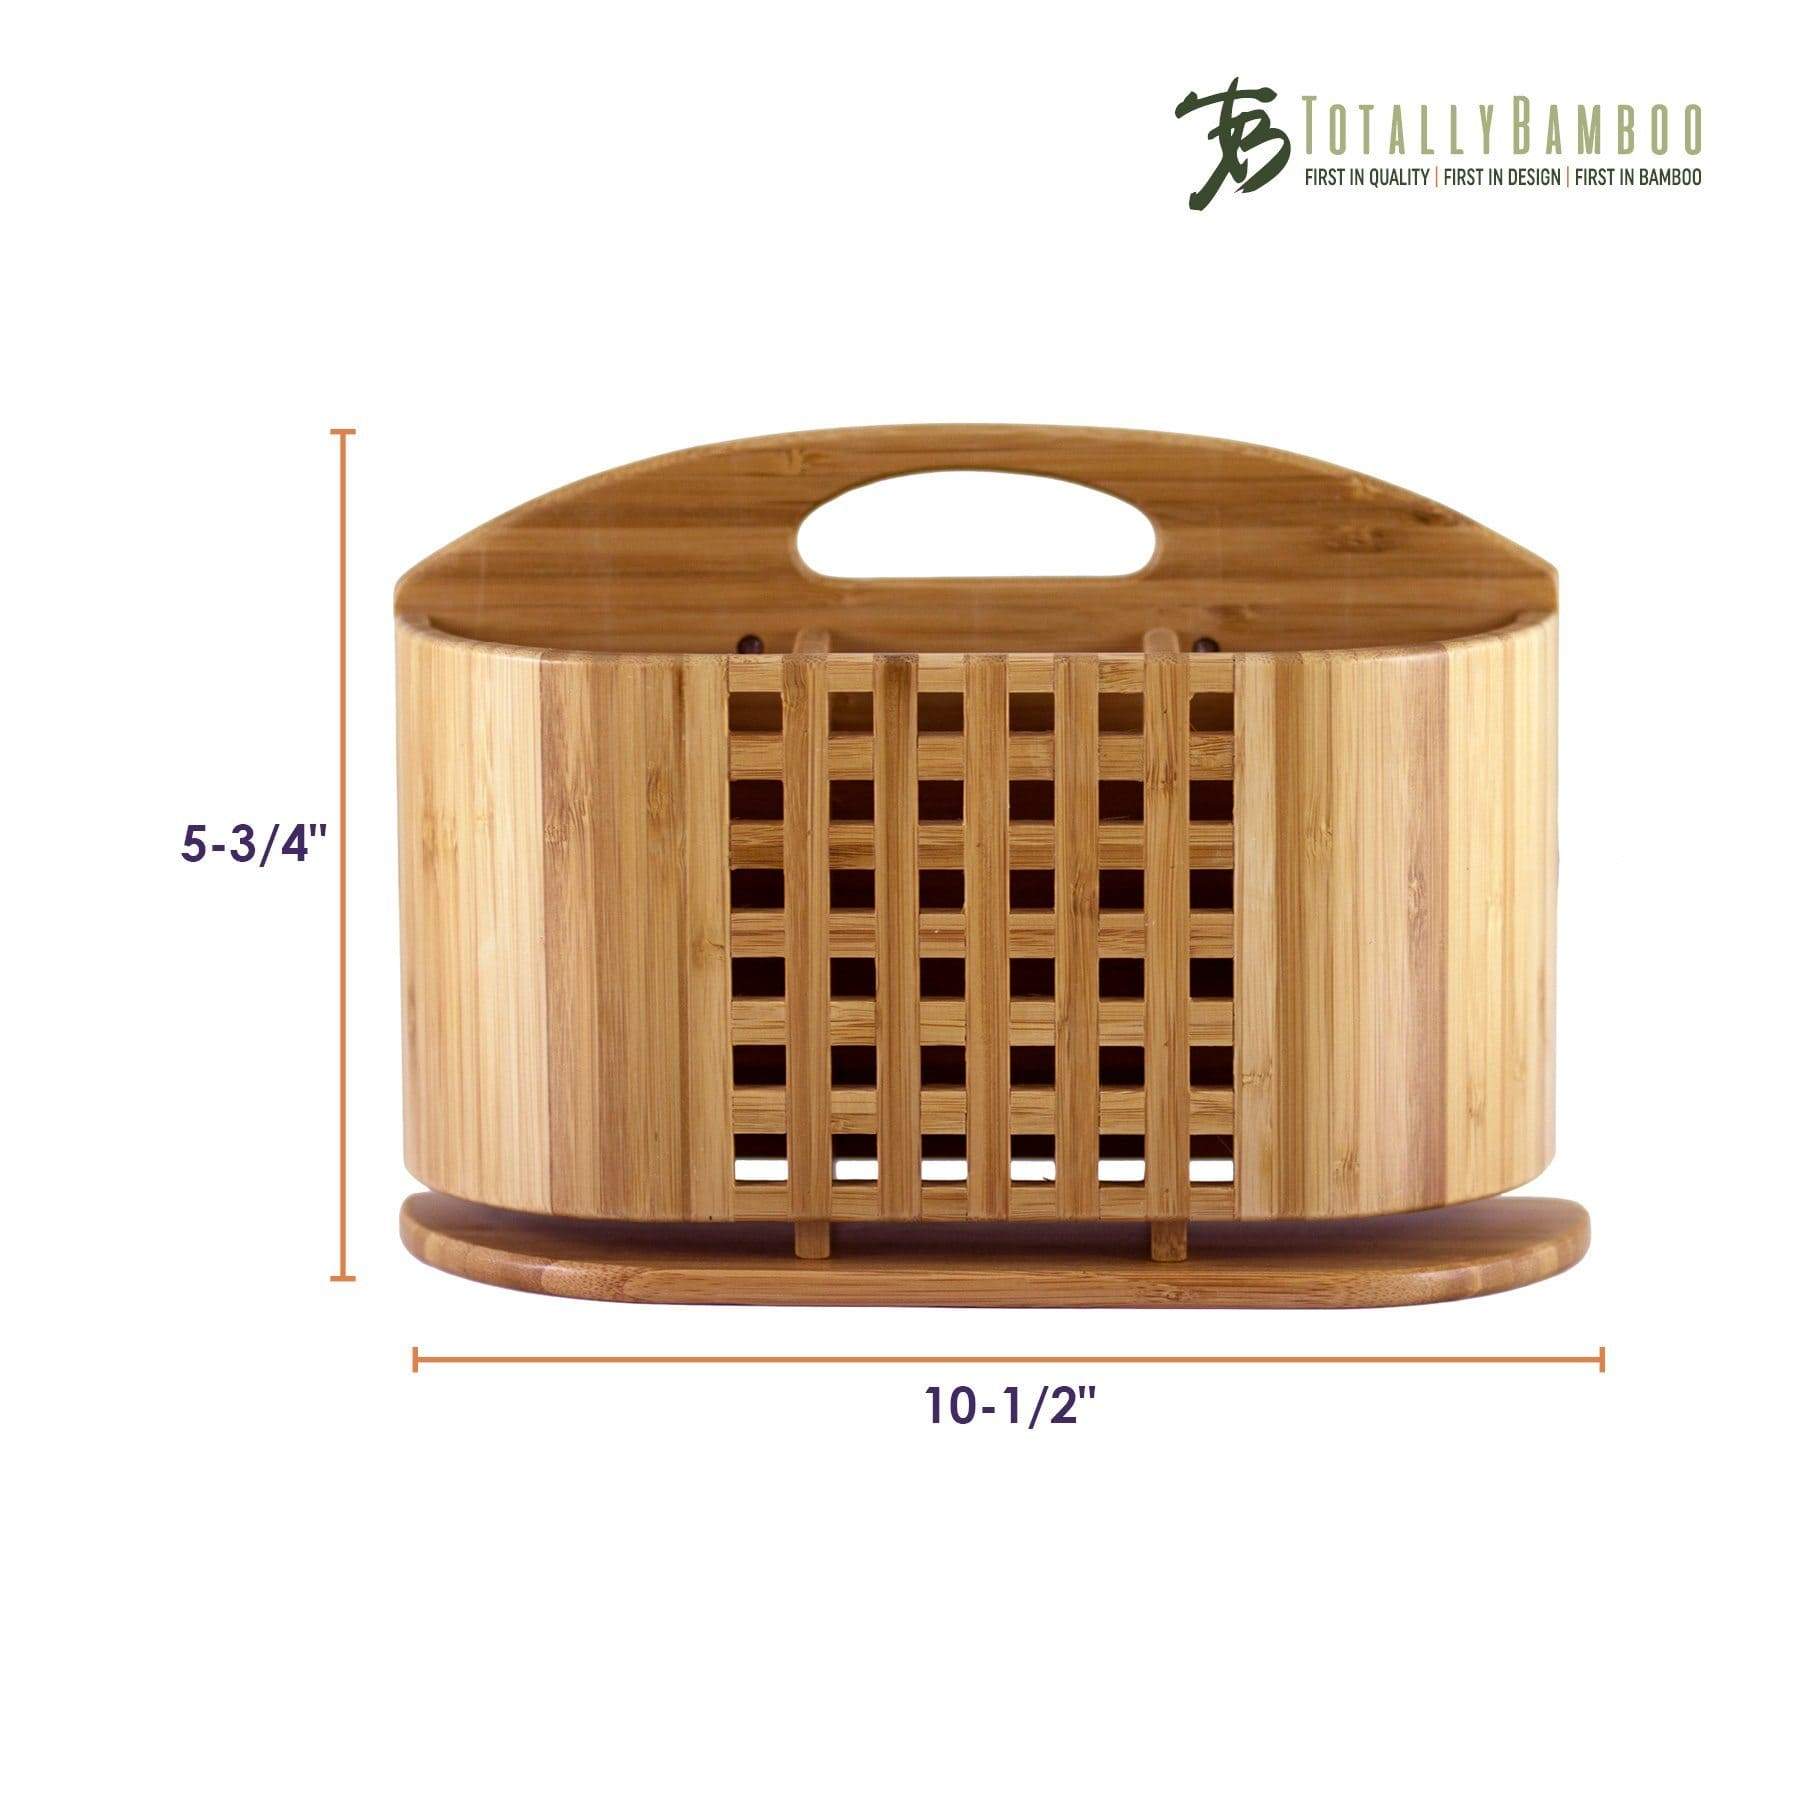 Totally Bamboo Dish Rack Utensil Holder – The Cook's Nook